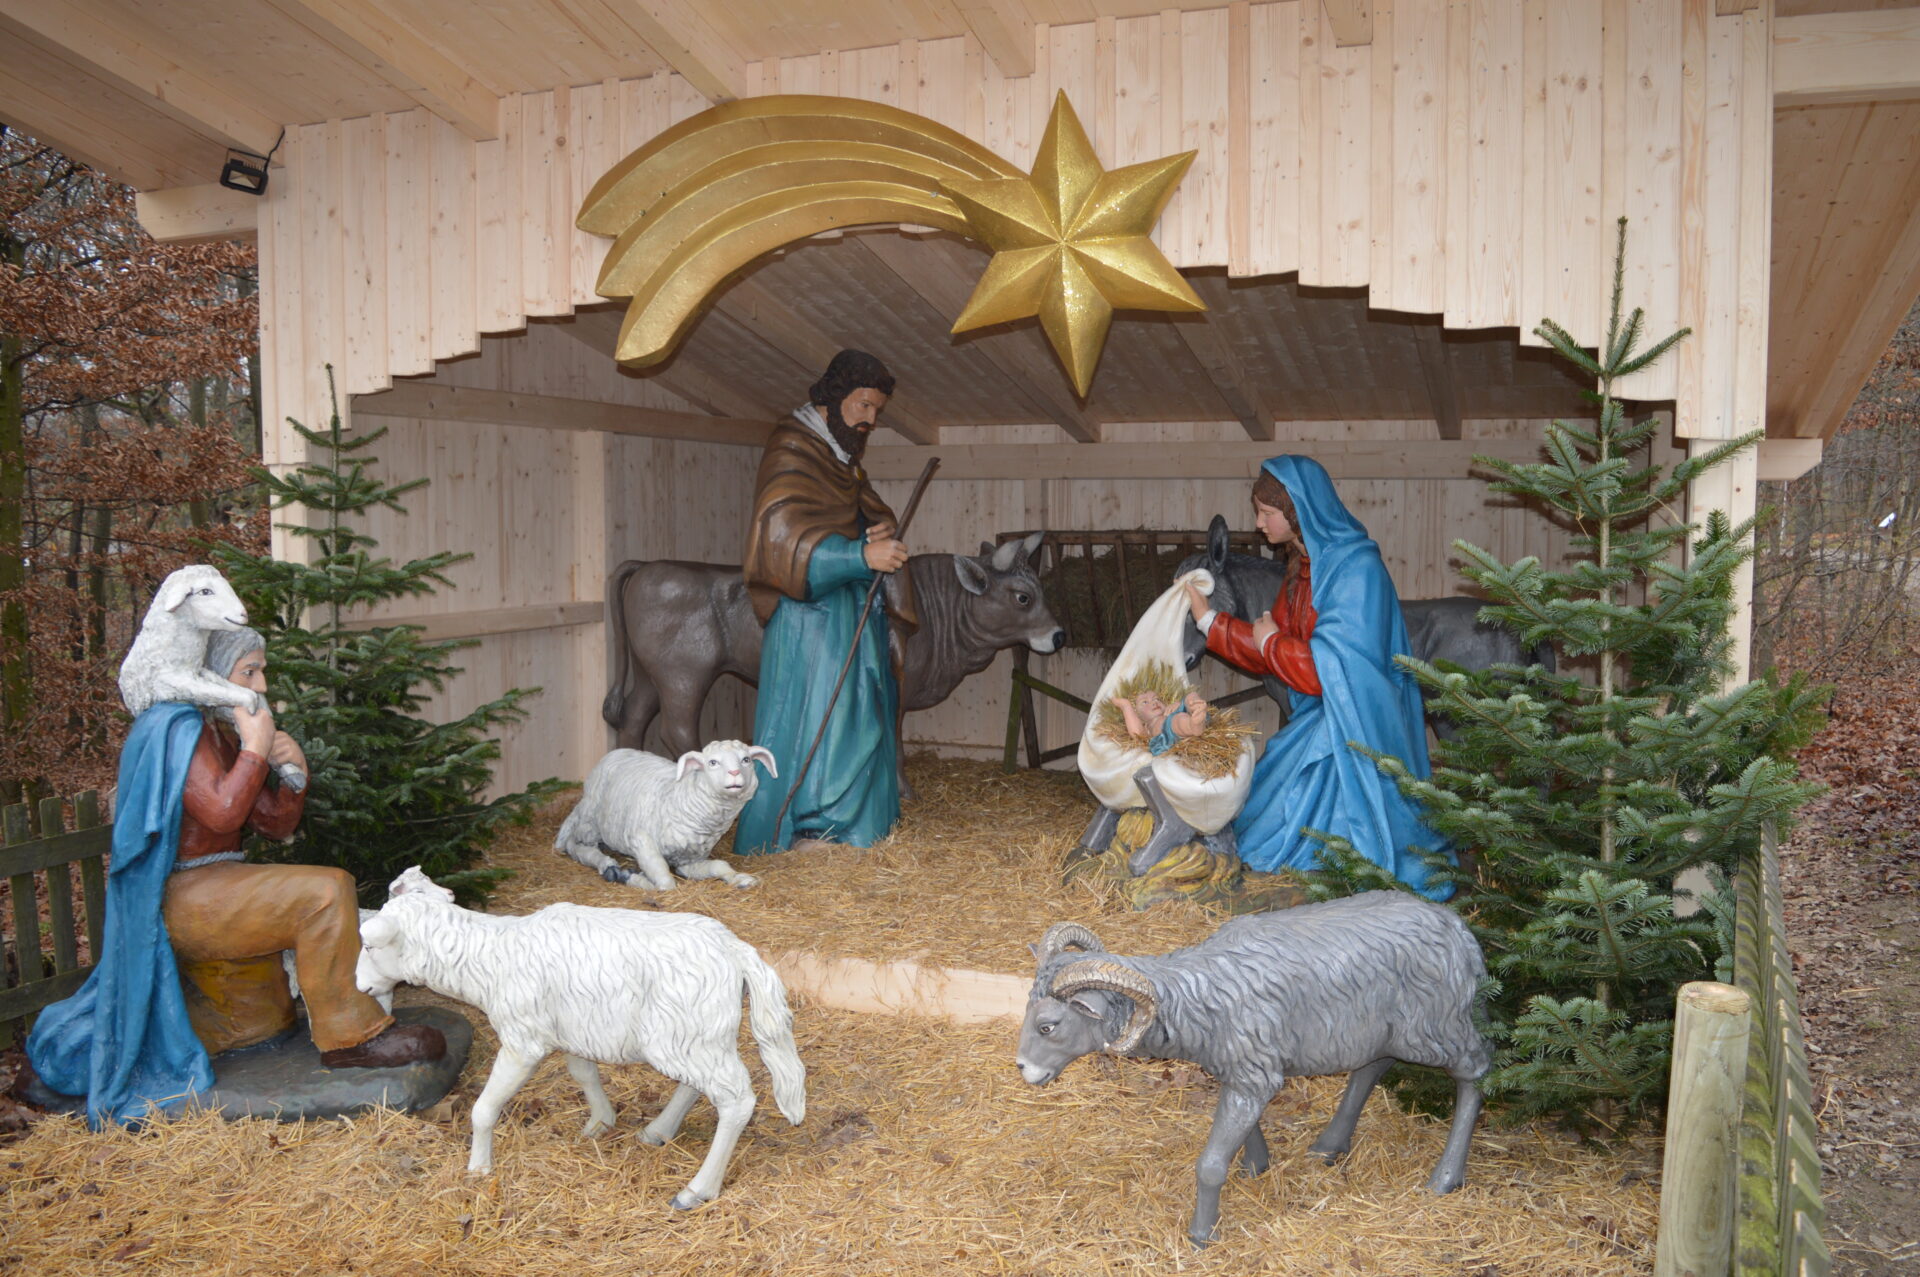 Nativity scene, delicacies & Christmas trees in Lainz - Vienna district newspaper